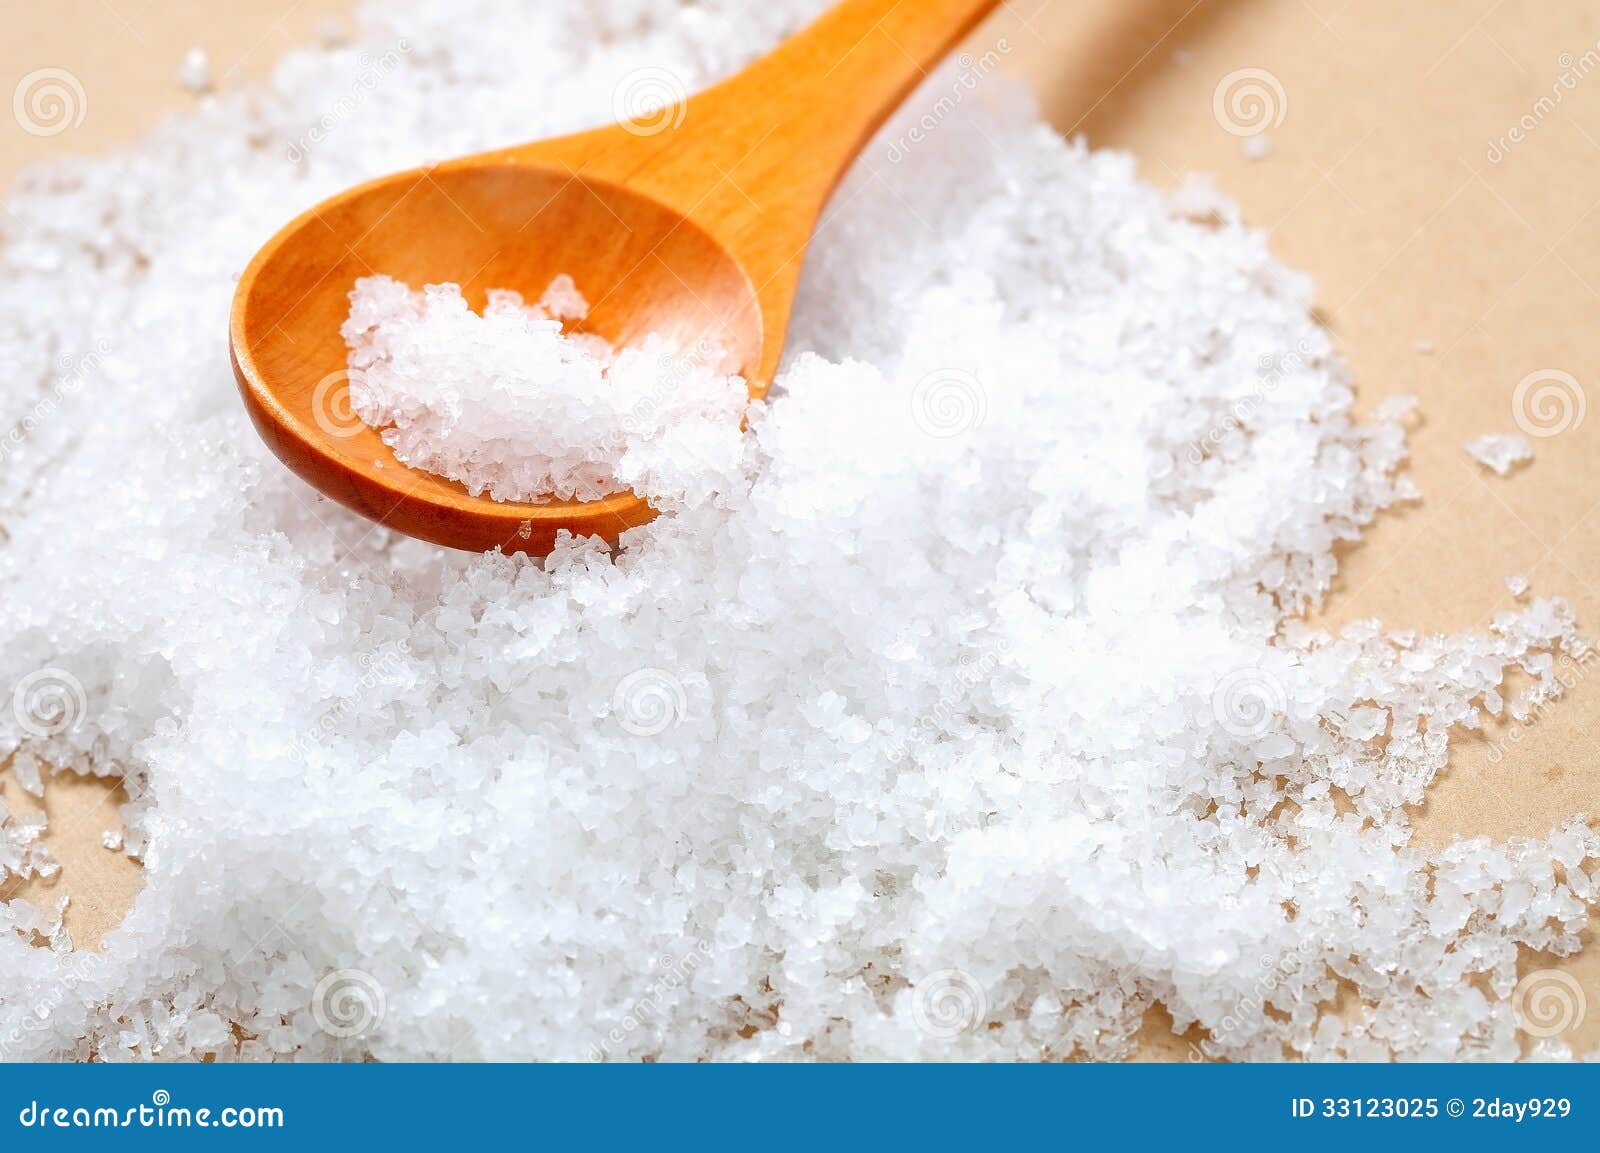 sea salt, health, wooden spoon, seasoning, saltiness